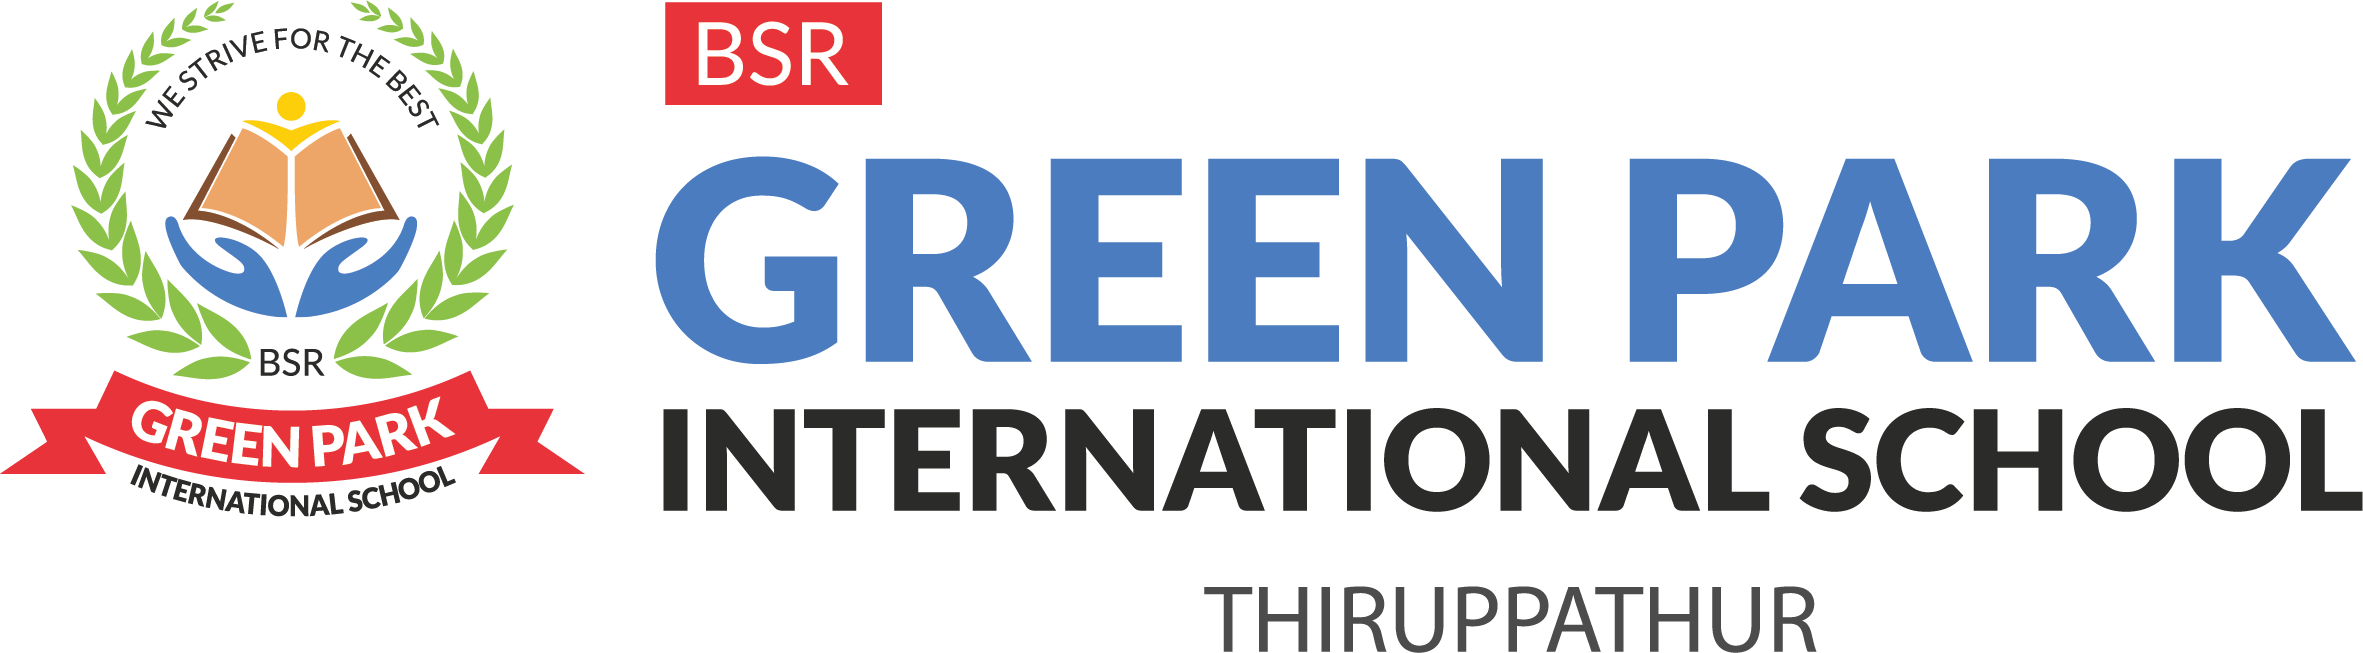 BSR Greenpark Logo